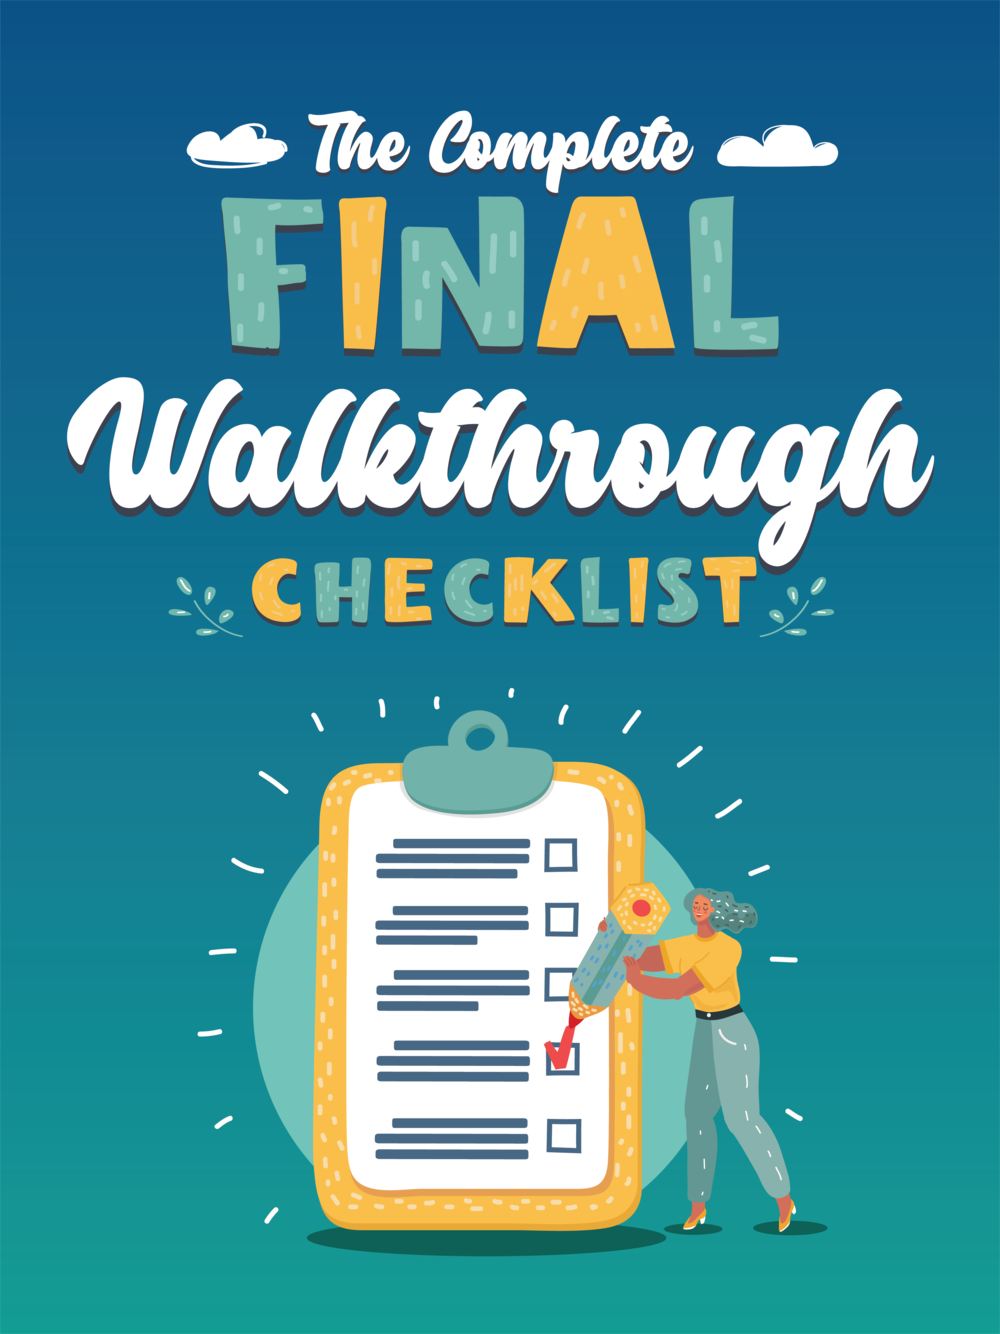 The Complete Final Walkthrough Checklist